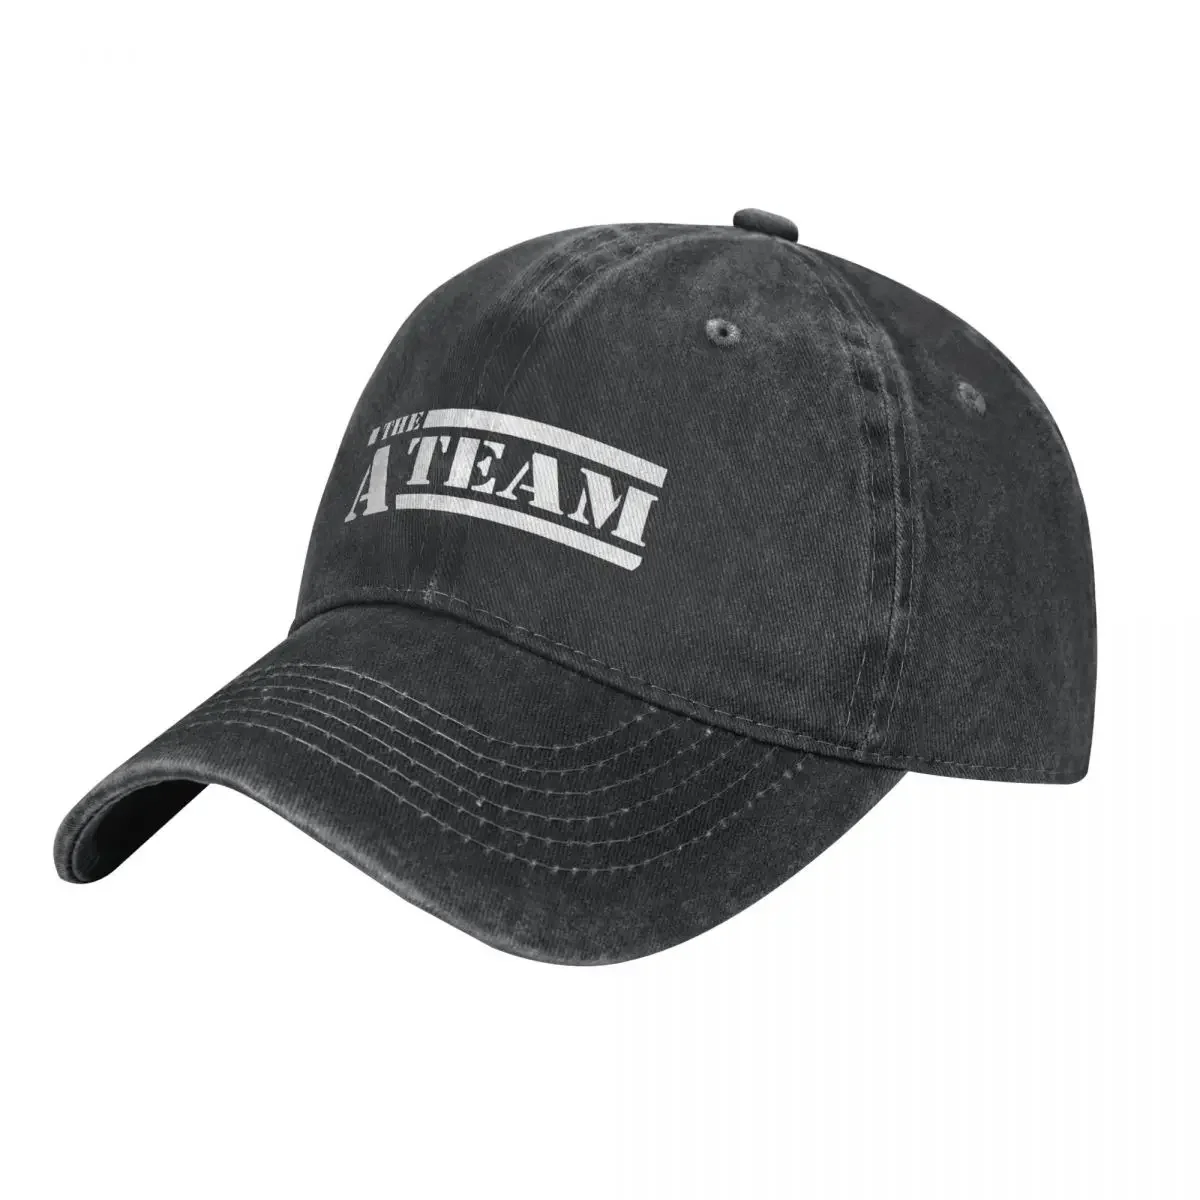 THE A-TEAM Cowboy Hat Hat Baseball Cap Big Size Hat Wild Ball hiking Sun Hats For Women Men's